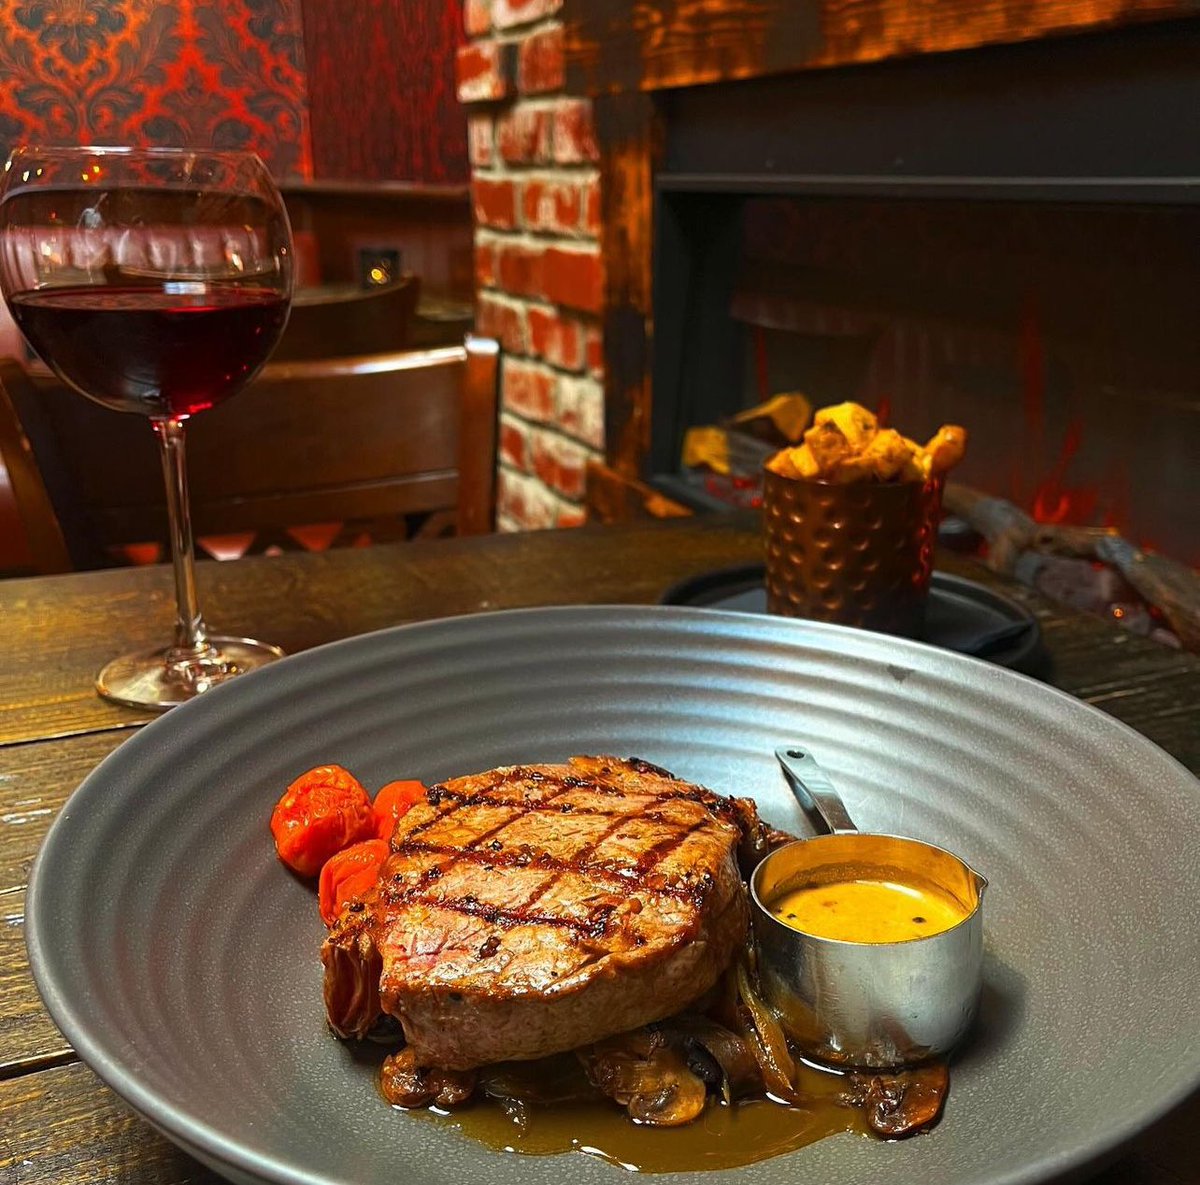 Enjoy our Rib-Eye Steak 🥩🔥 Grilled on a Solas Grill with Wood, Charcoal & Fire 🔥 #buffaloboysteakhouse #carrickonshannon #leitrim #leitrimtourism #leitrimobserver 
@MyCarrick @YesChef_IRL @TasteLeitrim